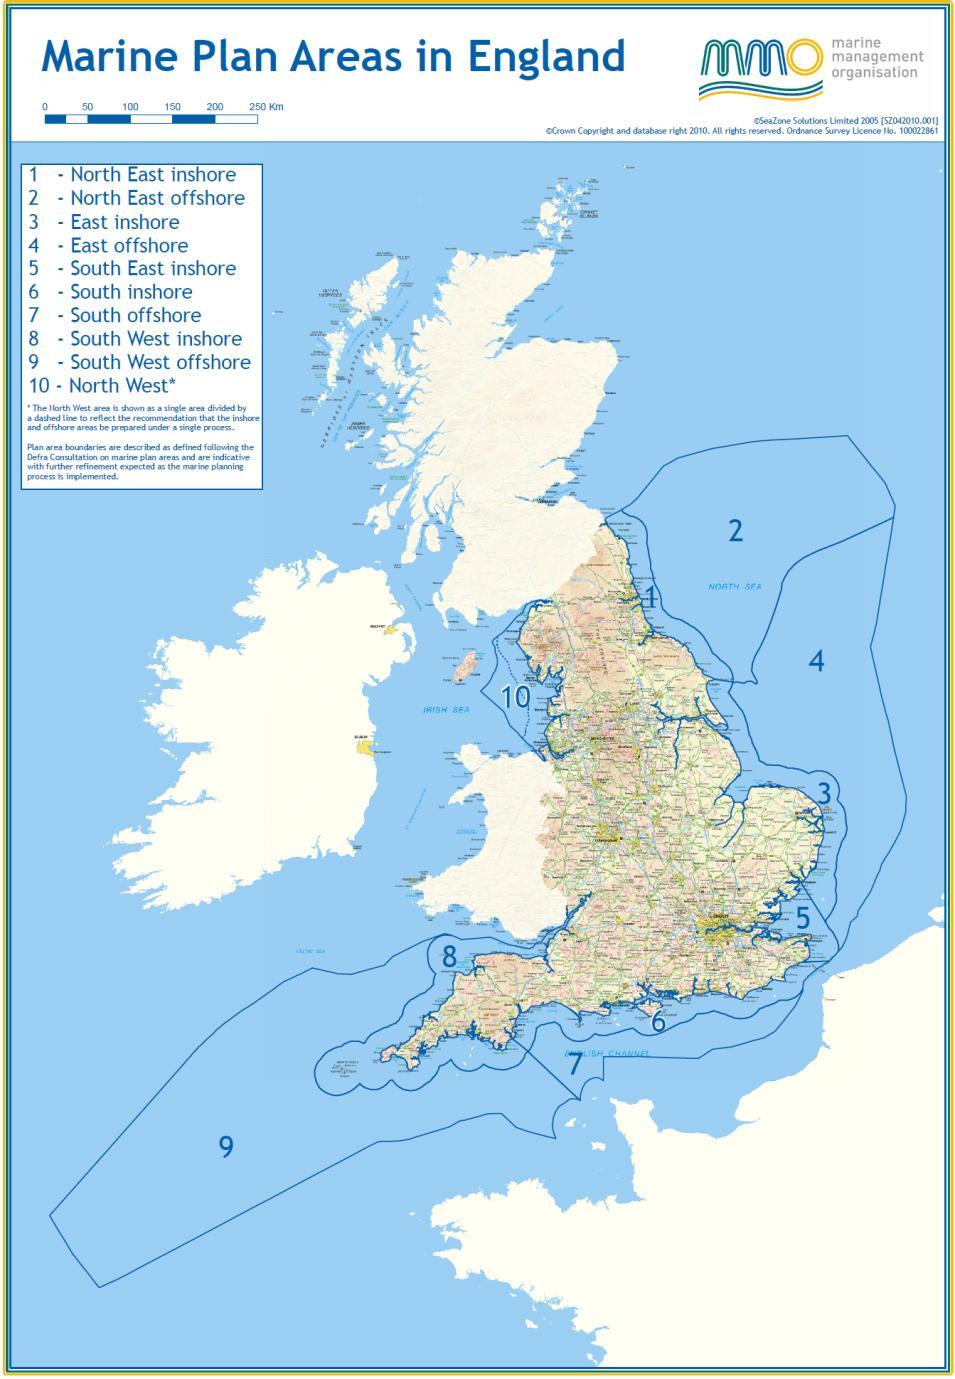 NW England has legislative borders with: